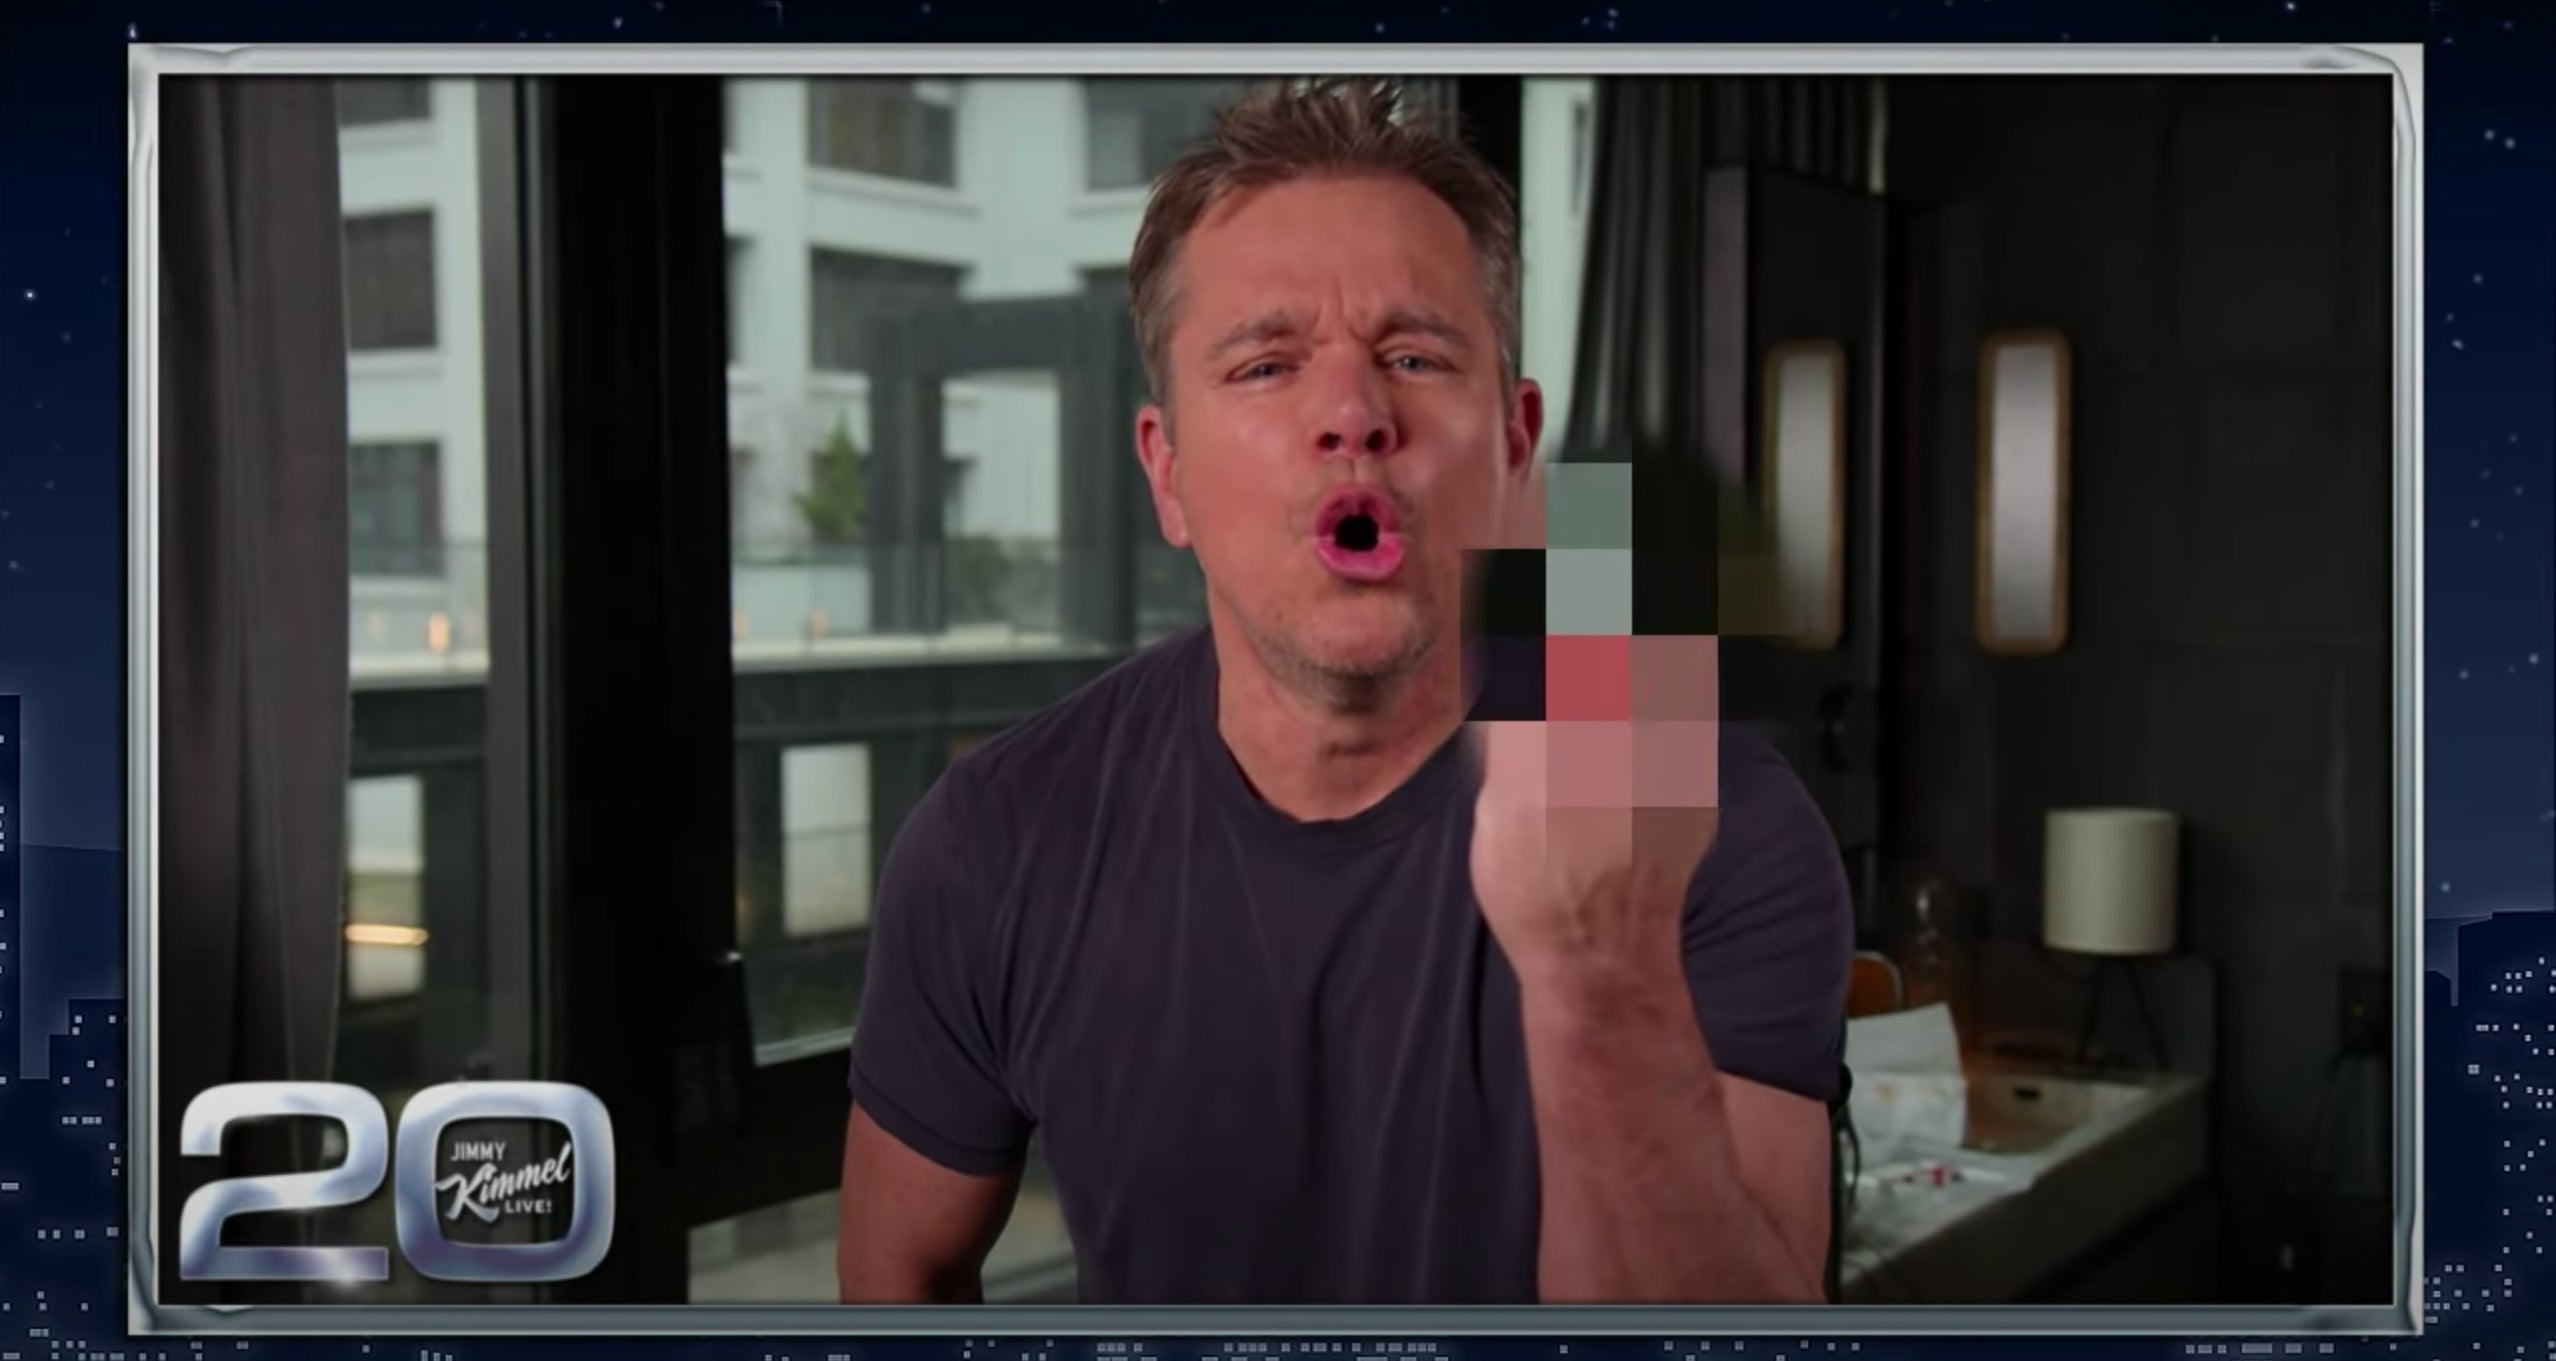 Matt Damon appears on the 20th anniversary episode of "Jimmy Kimmel Live!"